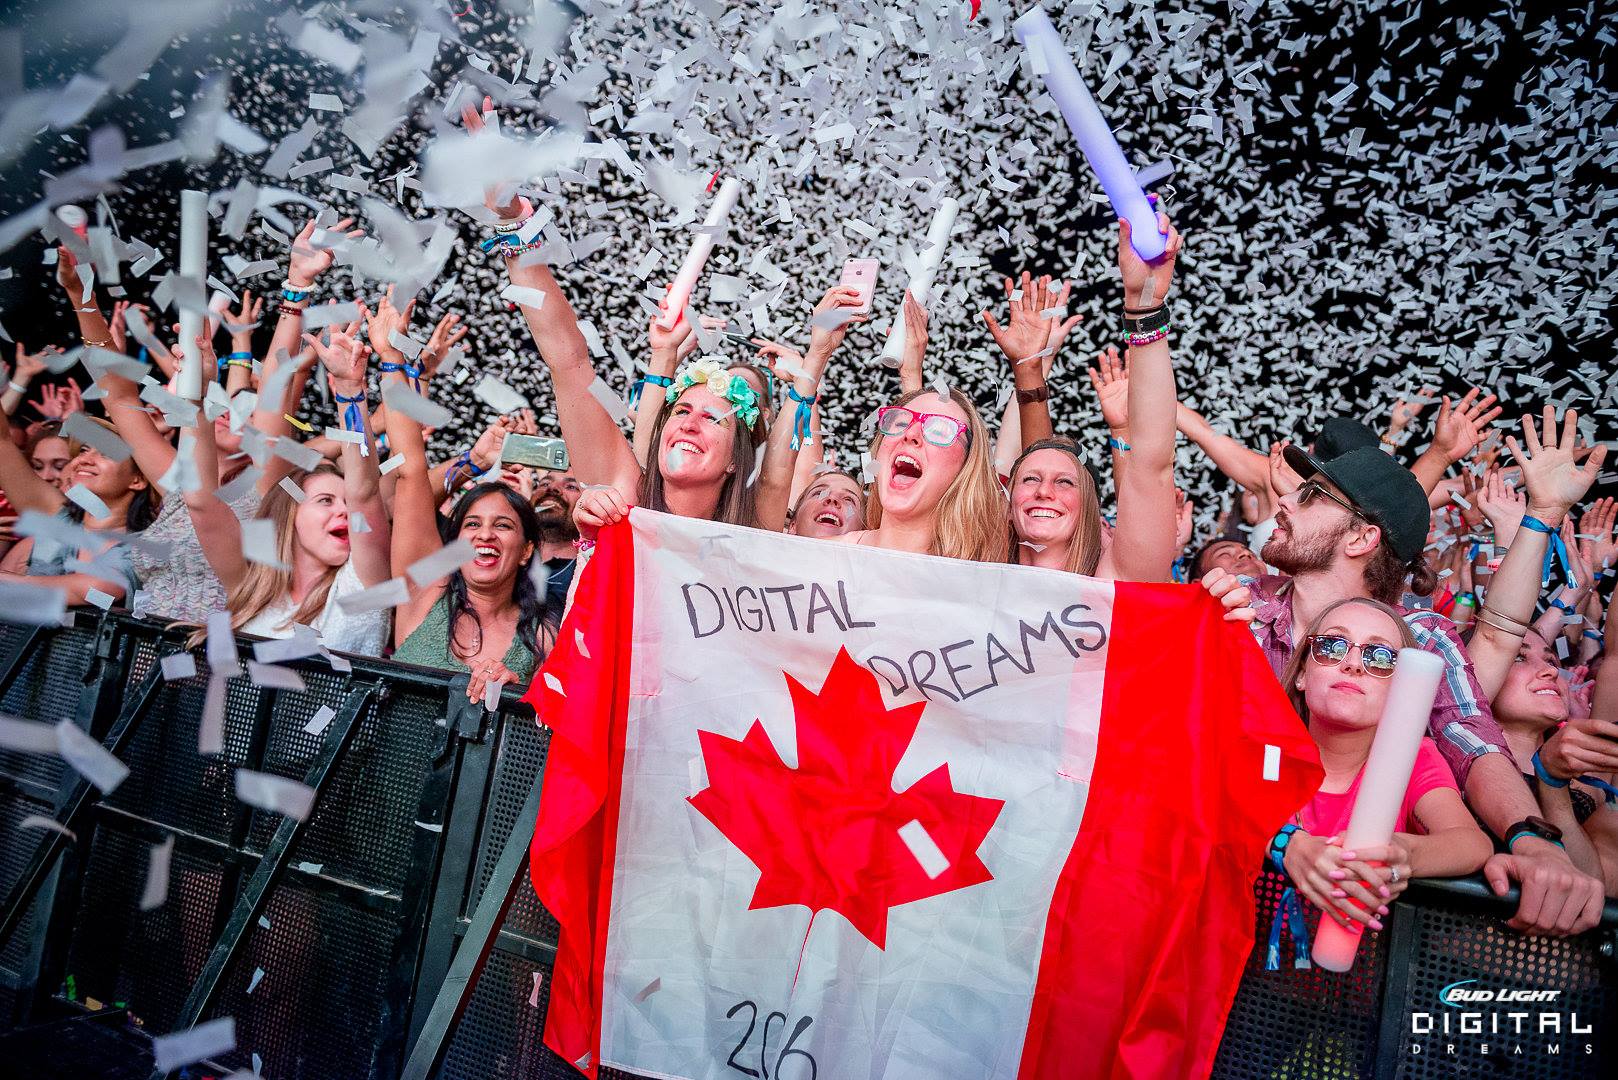 Canada Unites Under Digital Dreams Festival [Event Review]